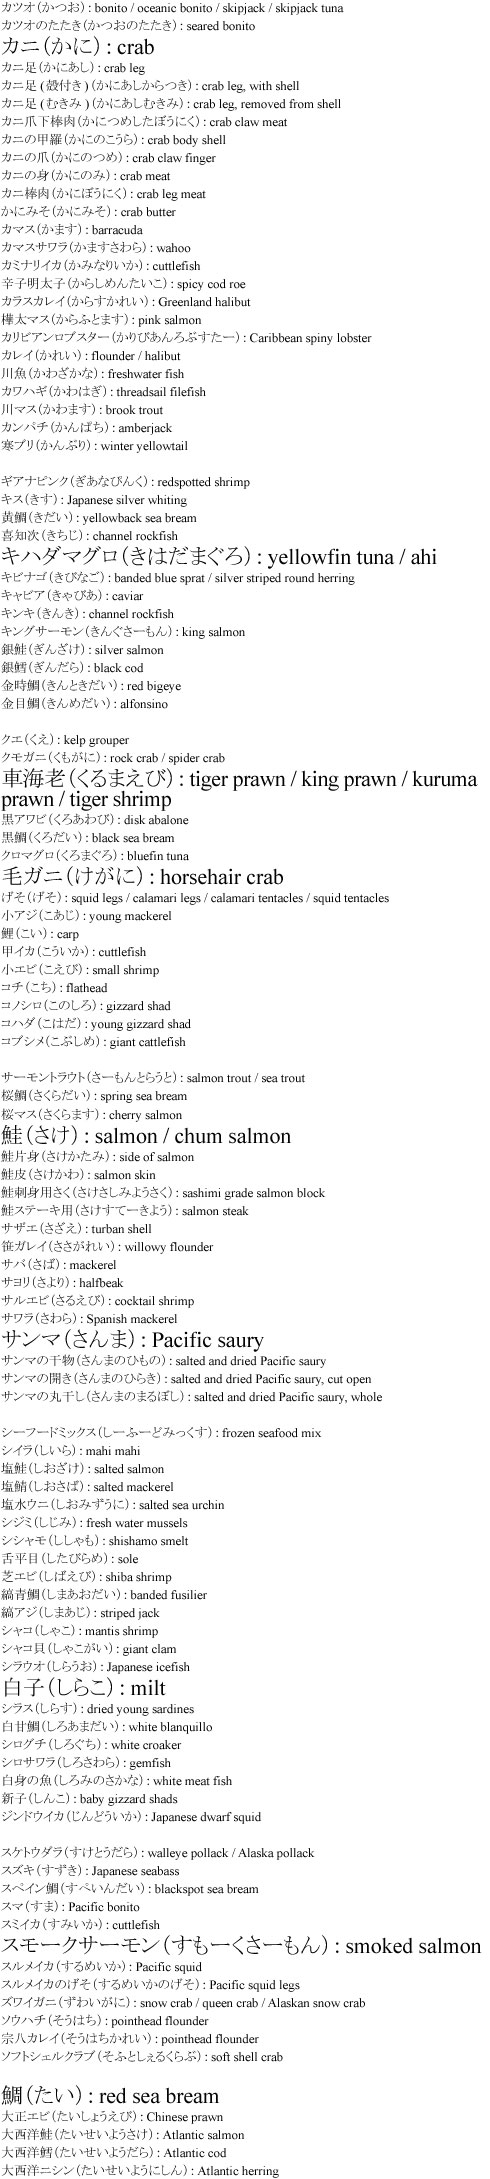 Fish and Shellfish : Salmon and Crab